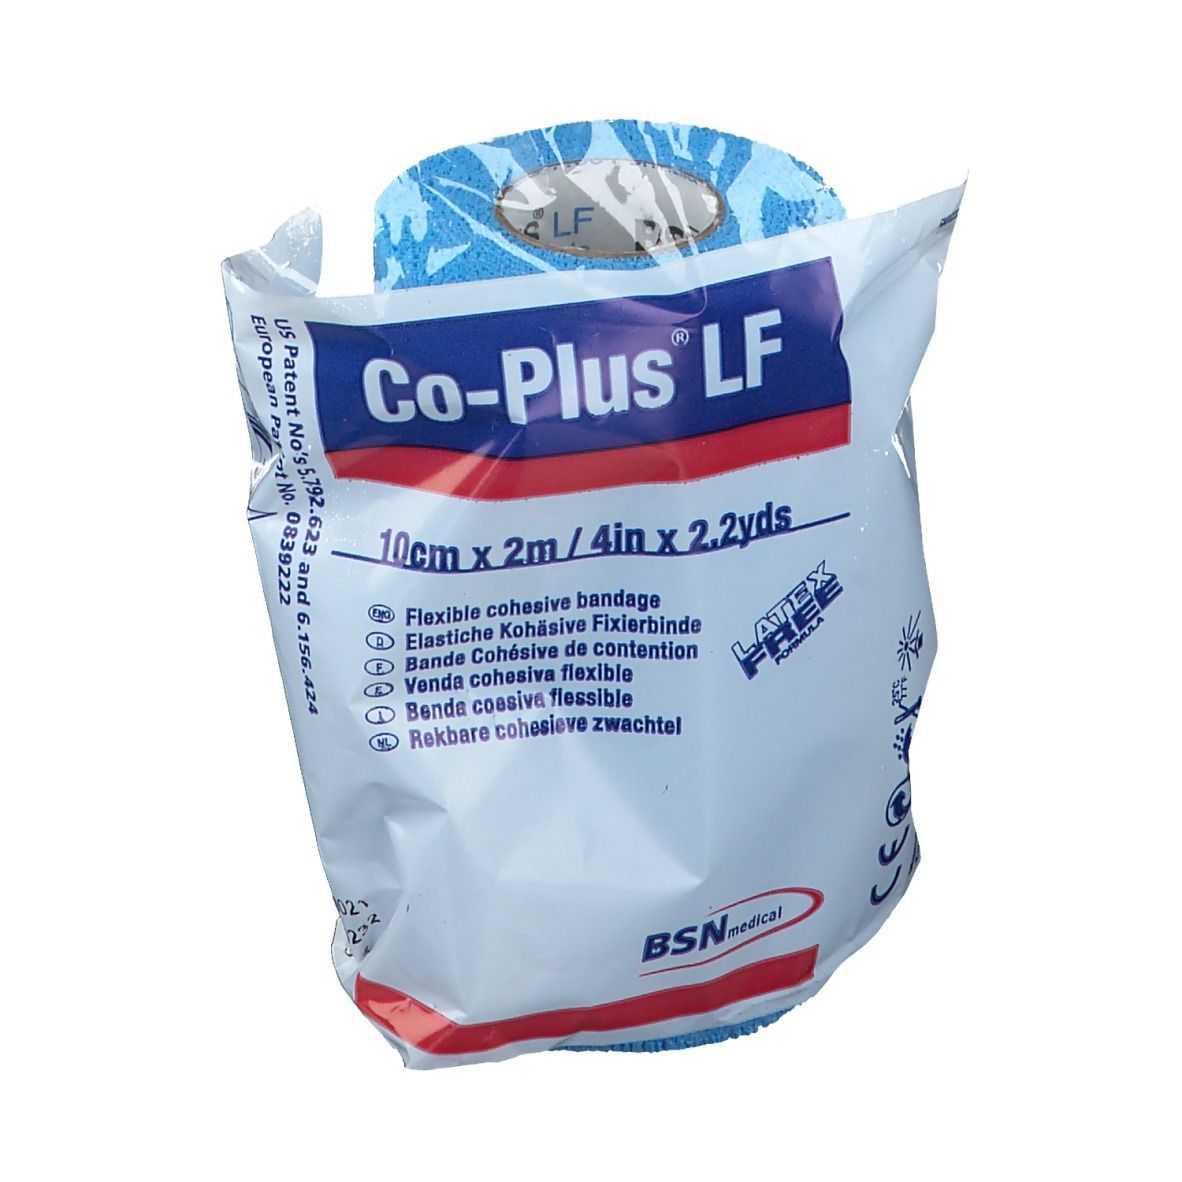 Venda cohesiva flexible Co-Plus® LF | 7,5 cm x 2 m